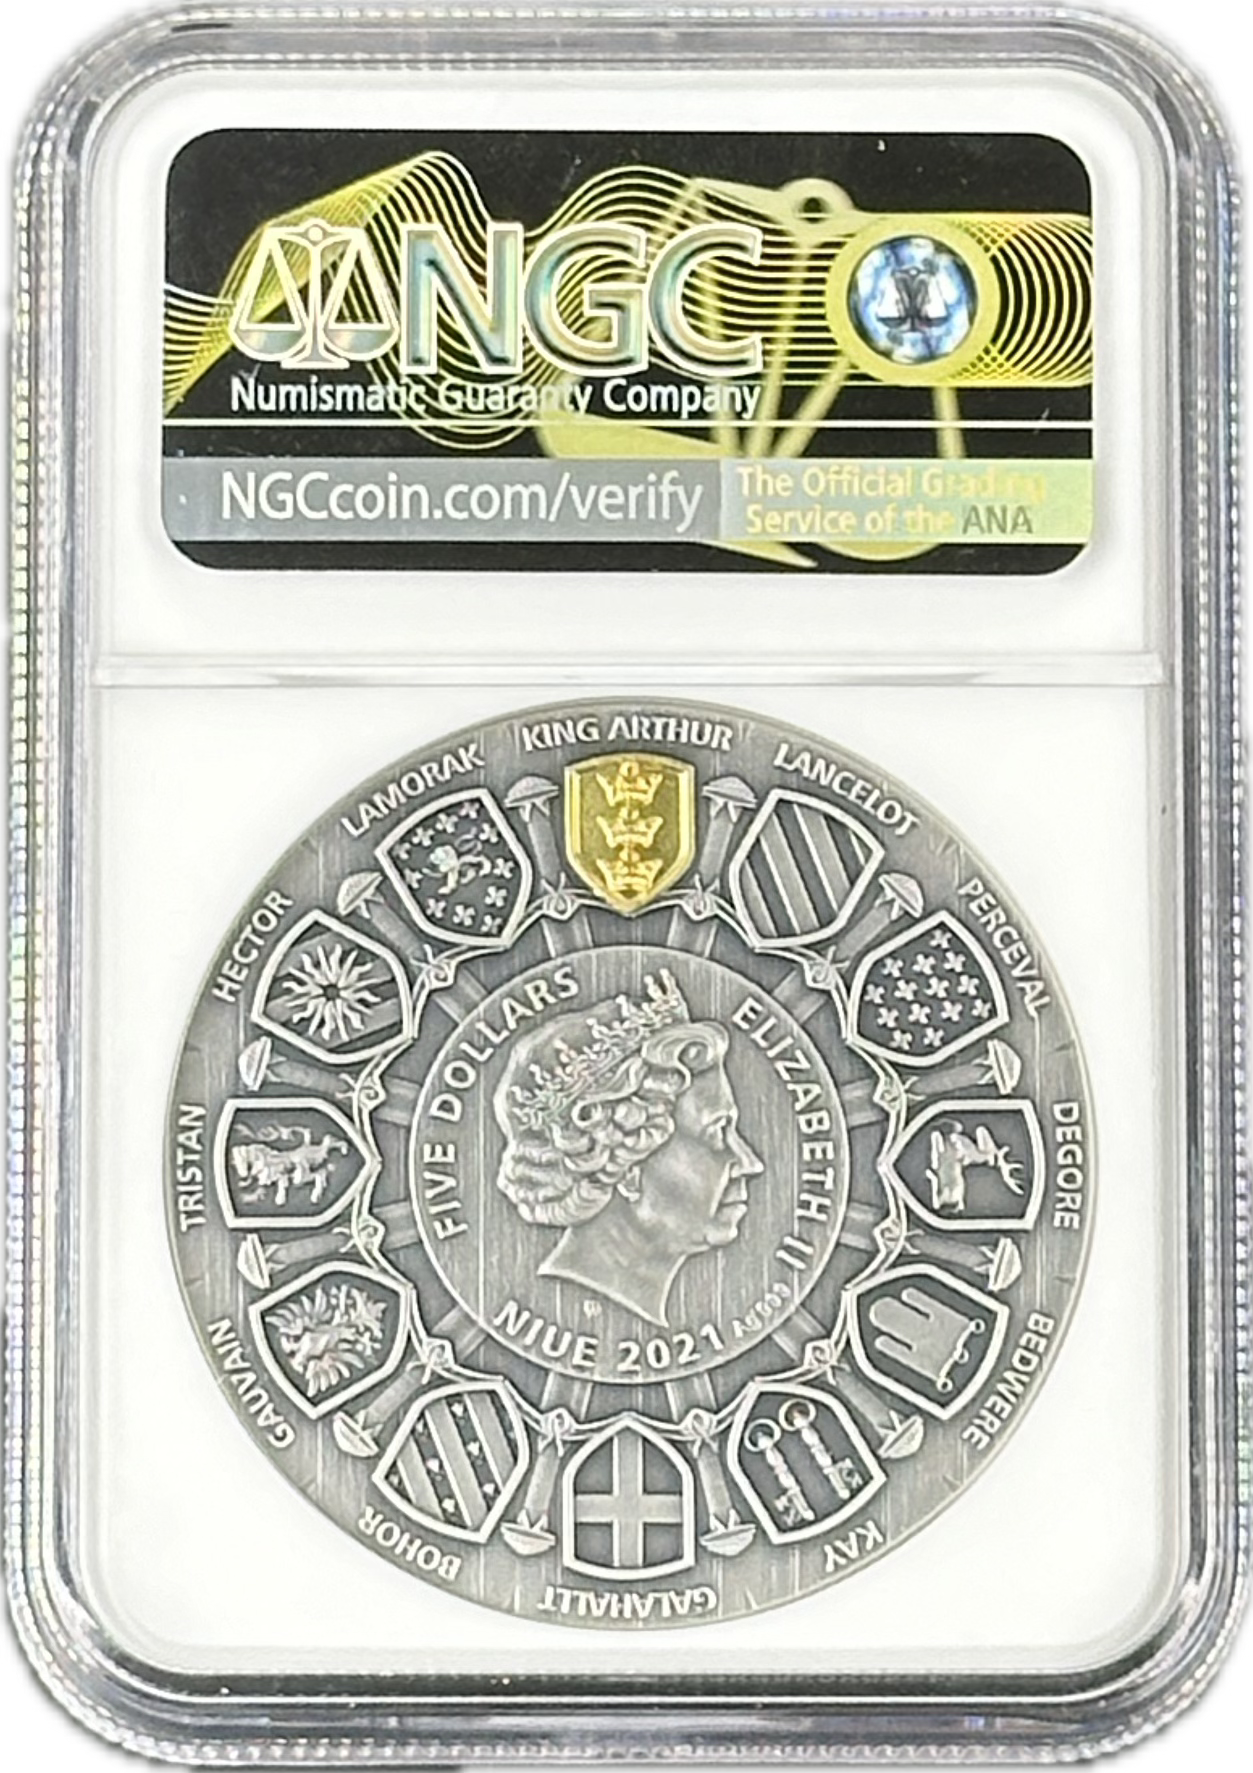 2018 Niue CHINESE DRAGON 2 oz Silver Coin MS 70 - OZB